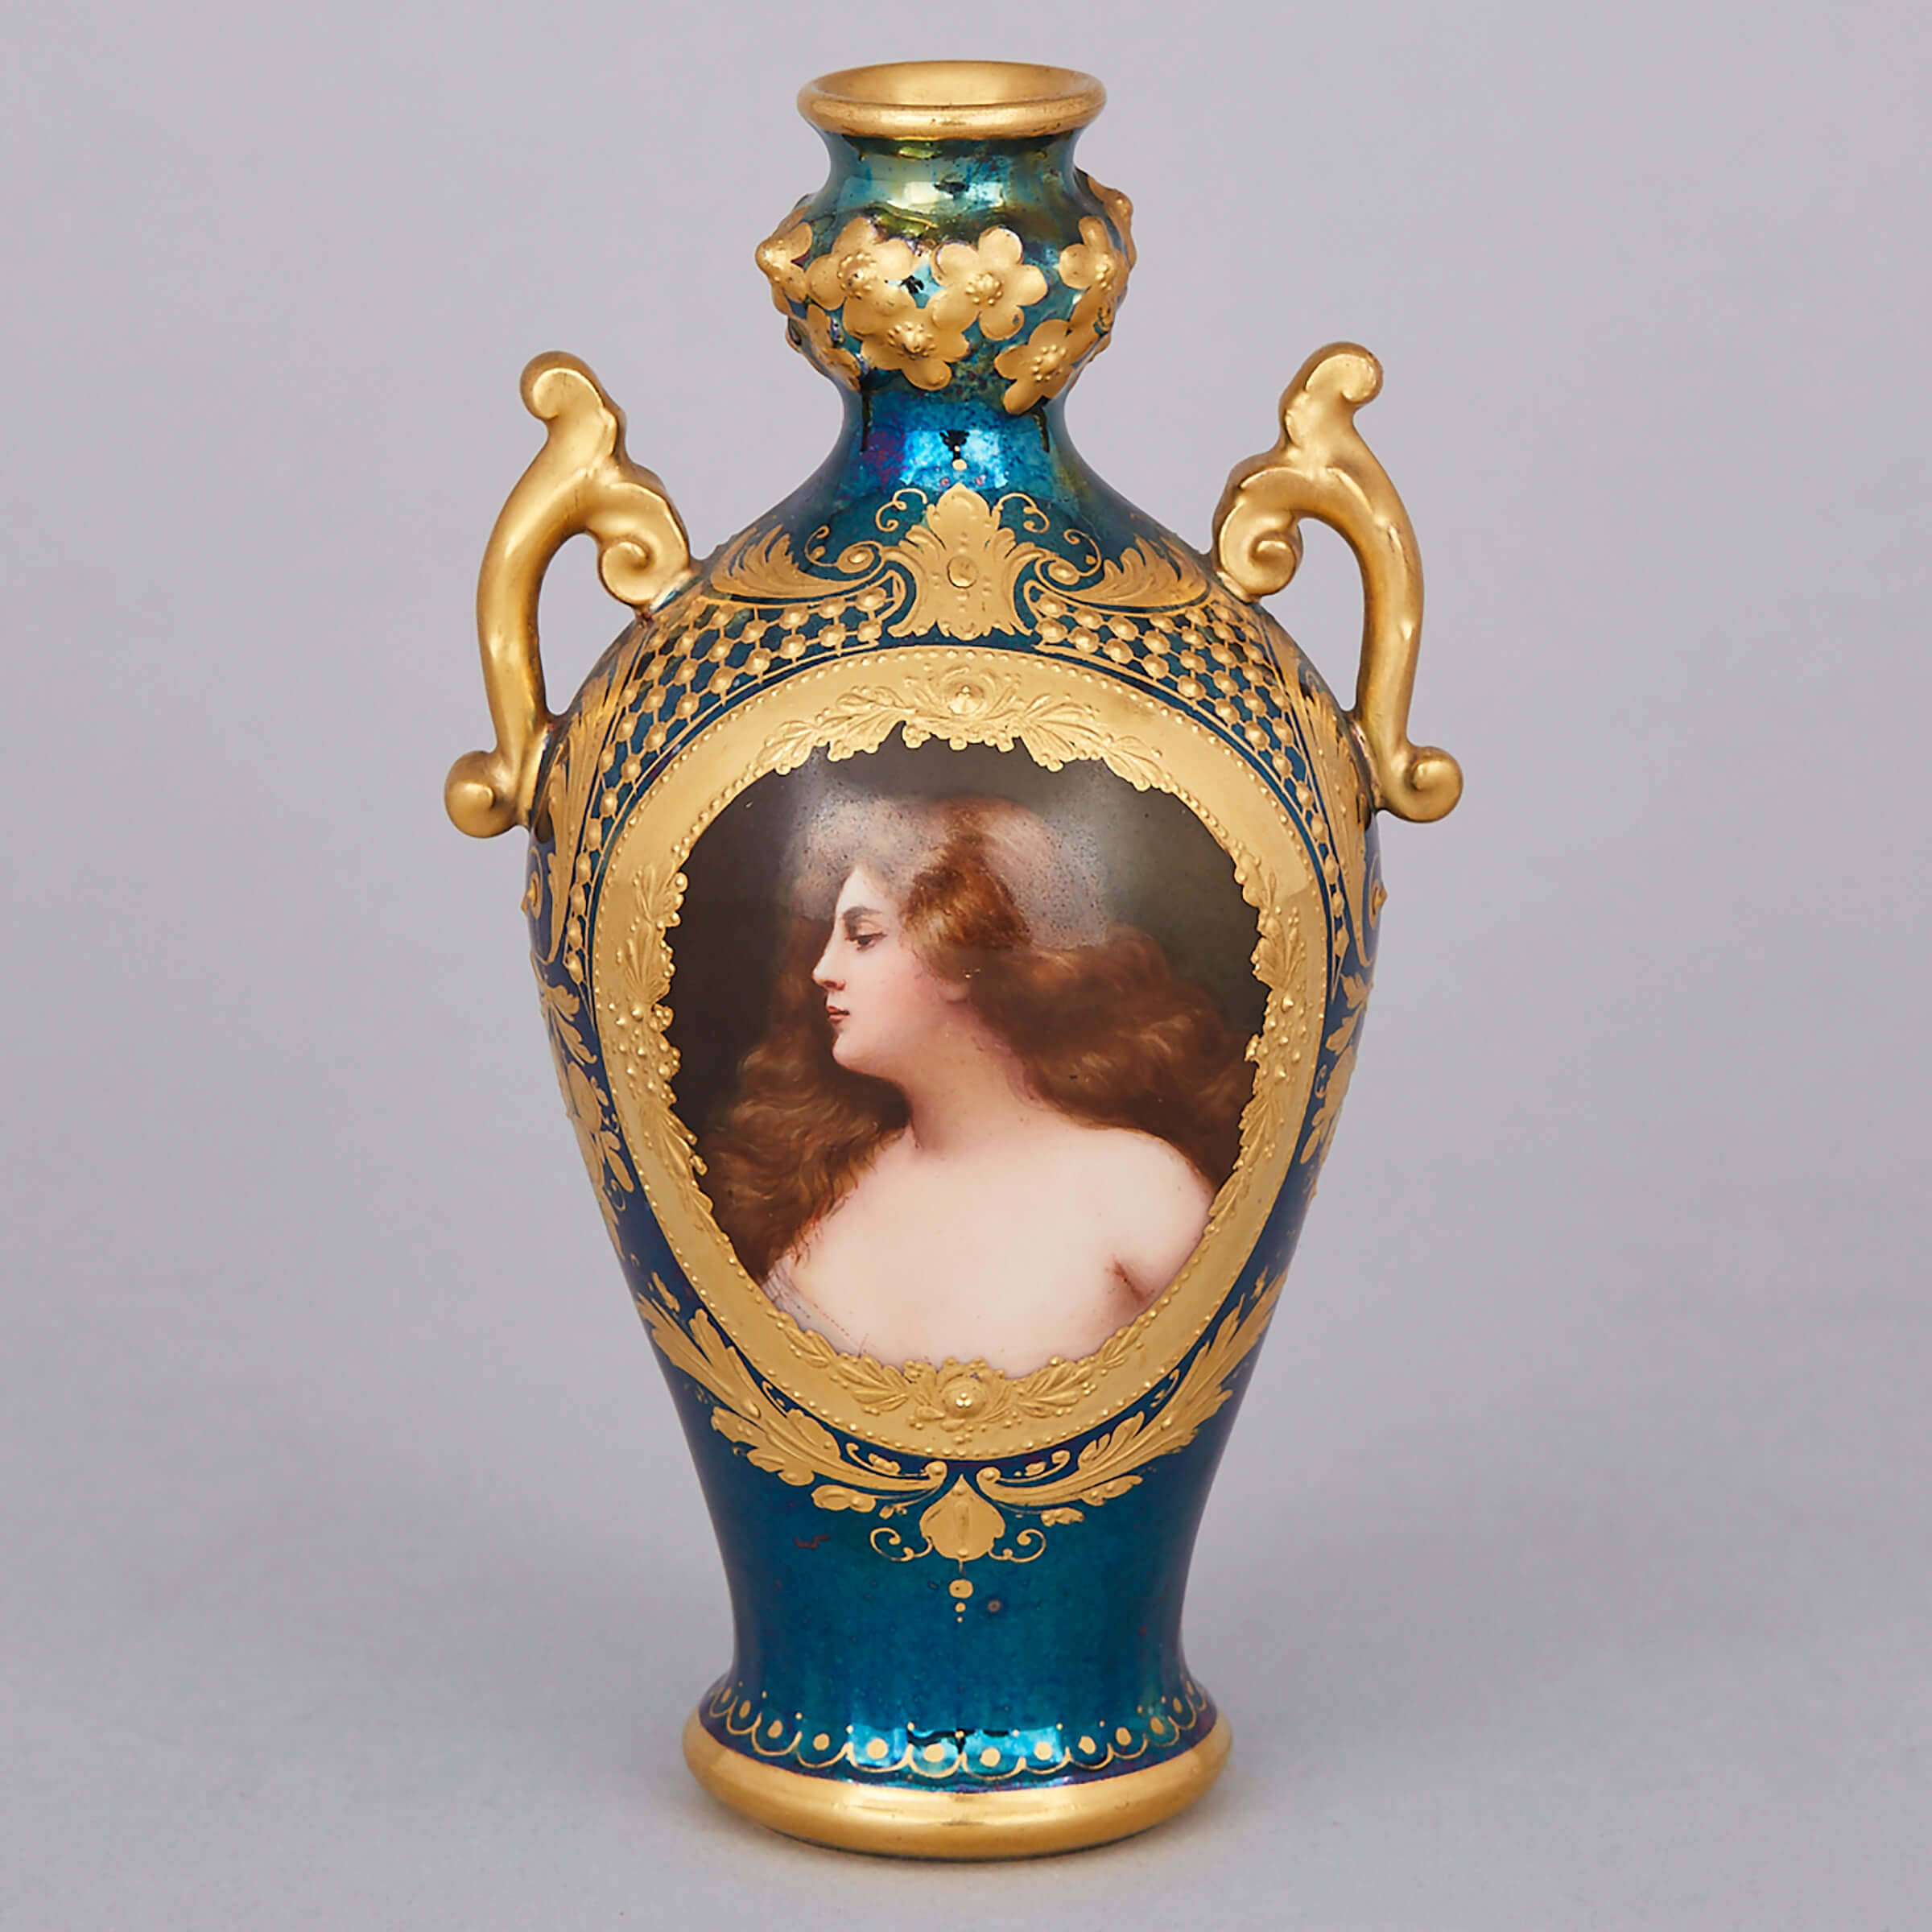 ‘Vienna’ Small Portrait Vase, ‘Erblüht’, c.1900